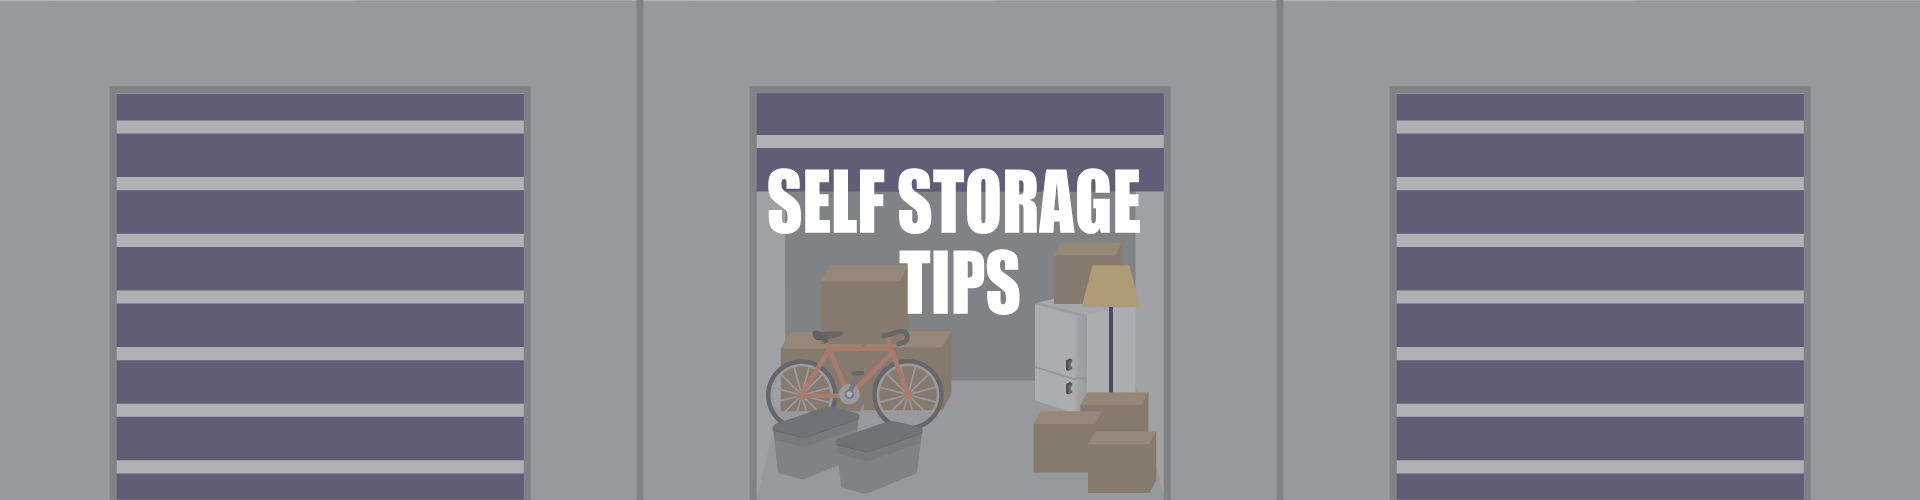 Self Storage Tips hero image